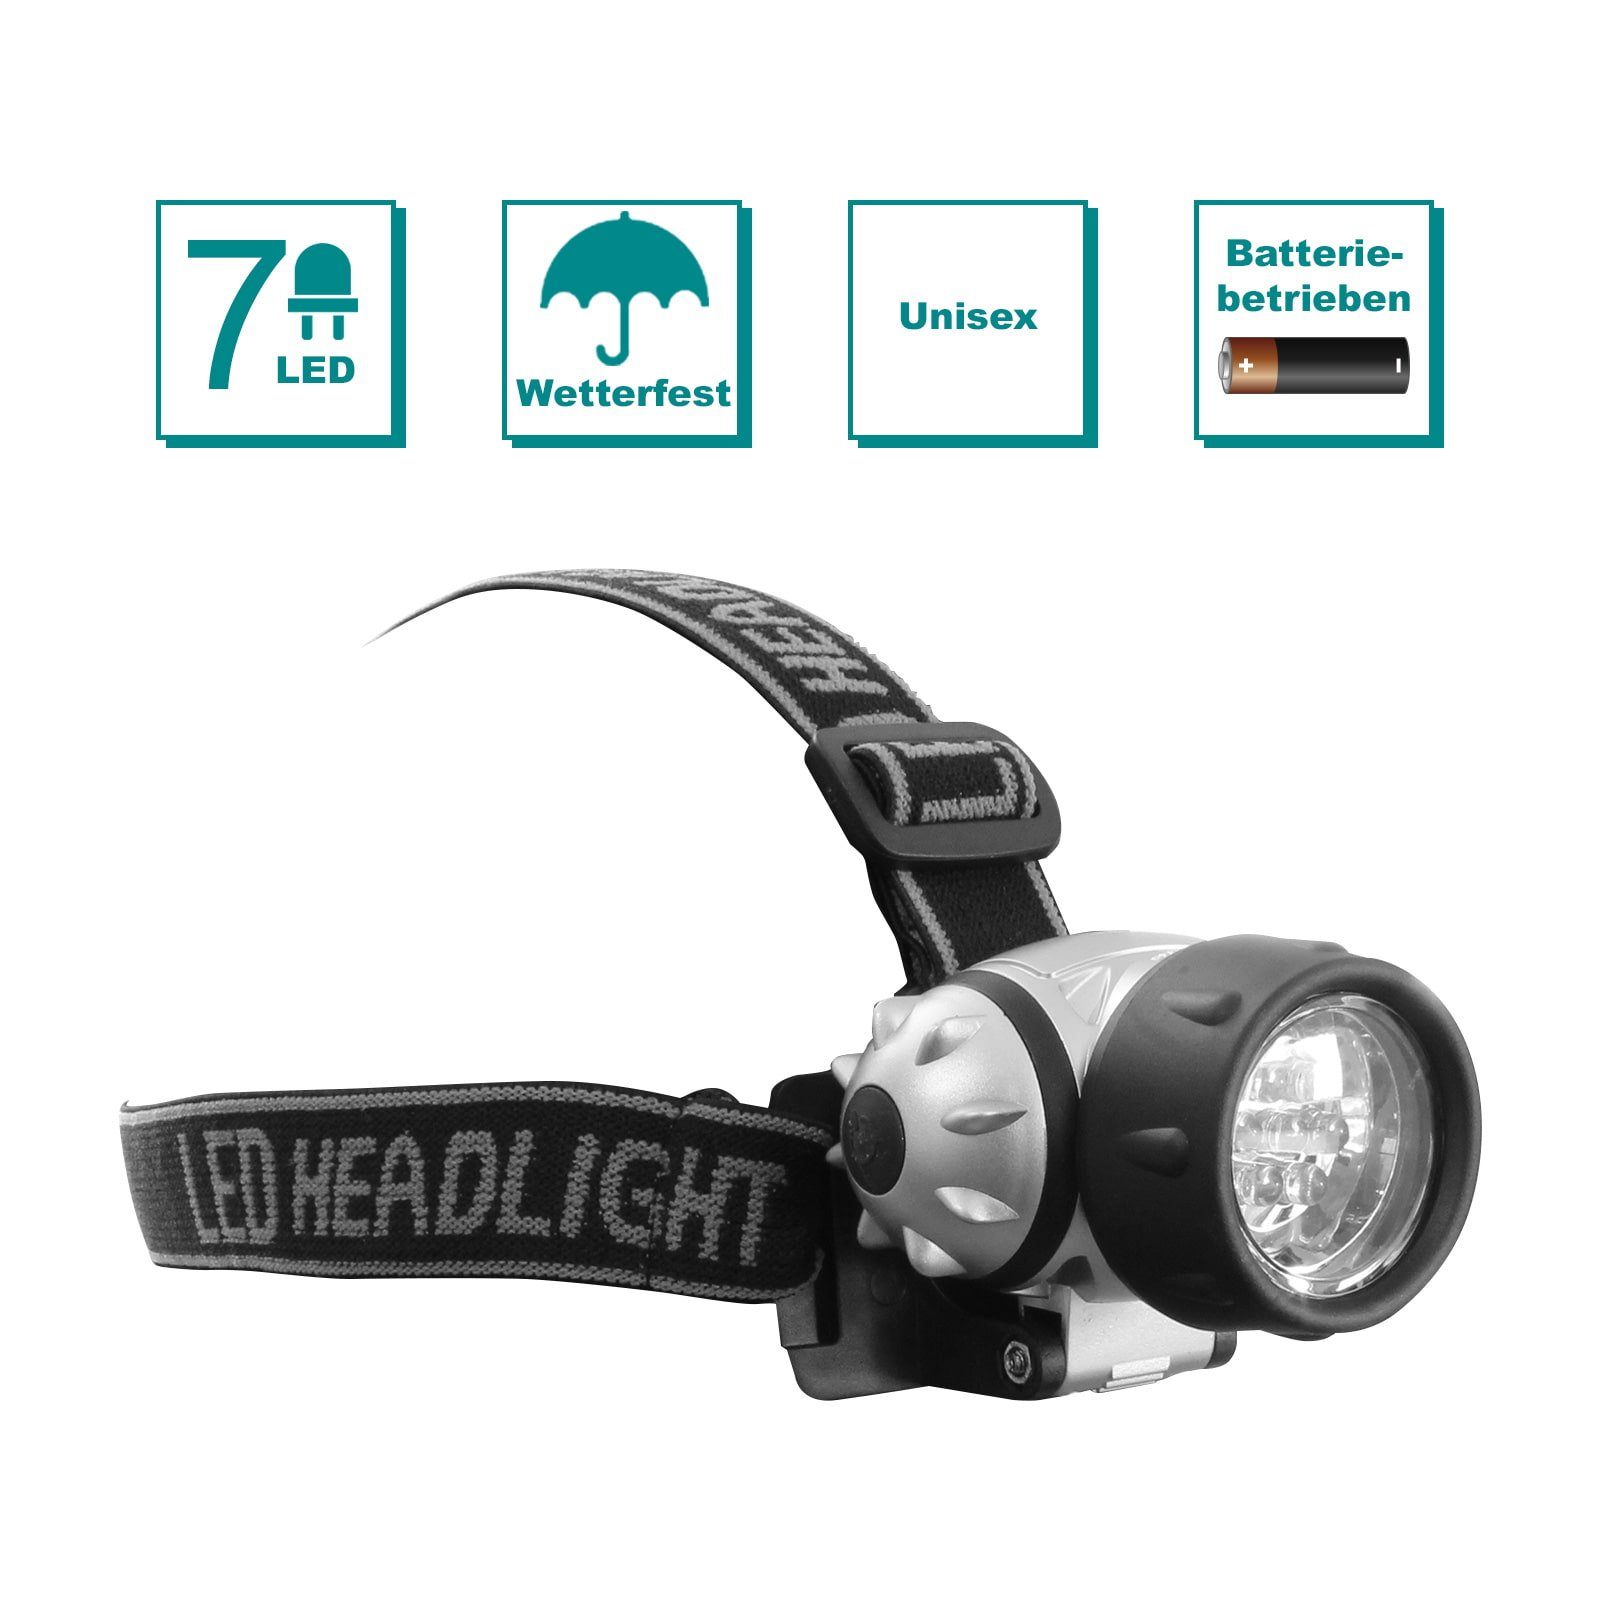 7 mit 3 LED über IP44 Stirnlampe Wasserfest nach EAXUS LEDs, Dimmbar Leuchtmodi, Stirnleuchte/Kopflampe LED